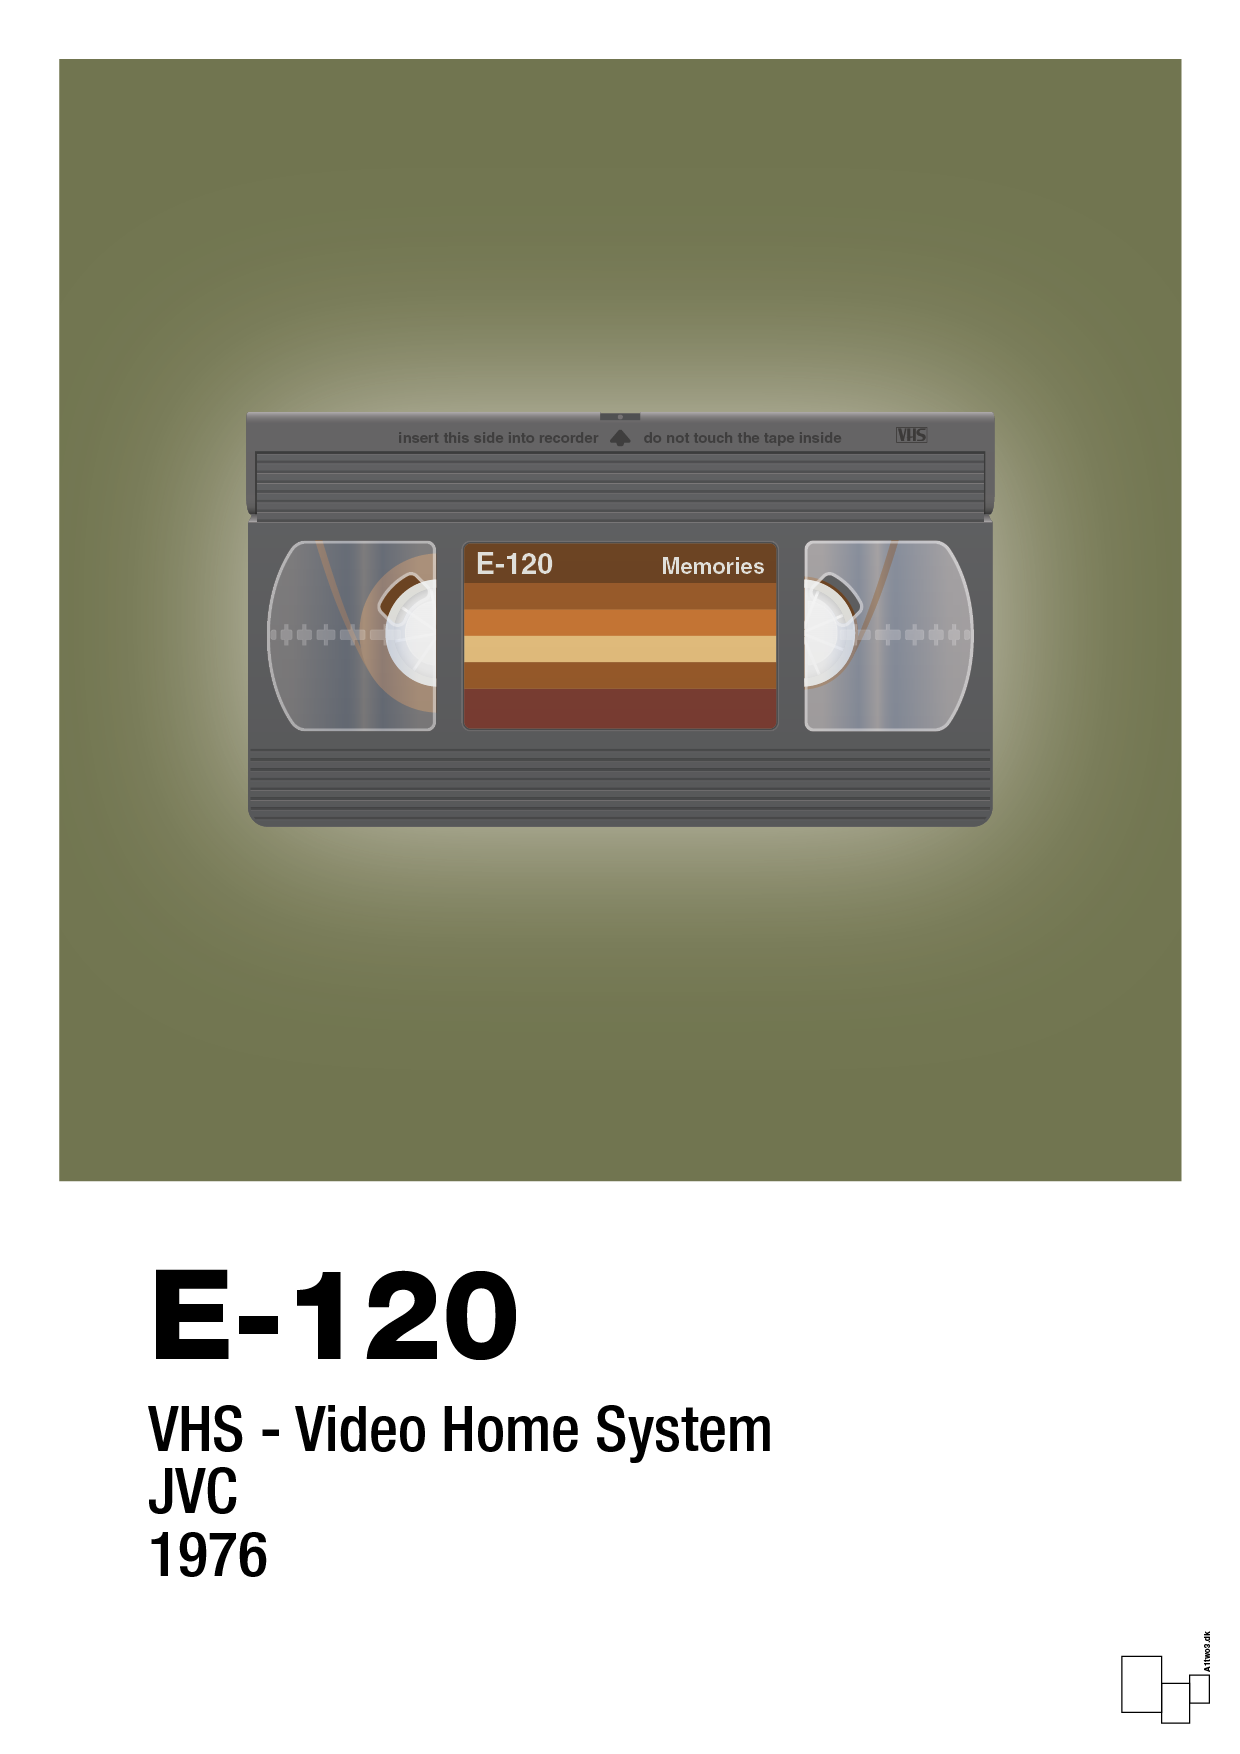 videobånd e-120 - Plakat med Grafik i Secret Meadow